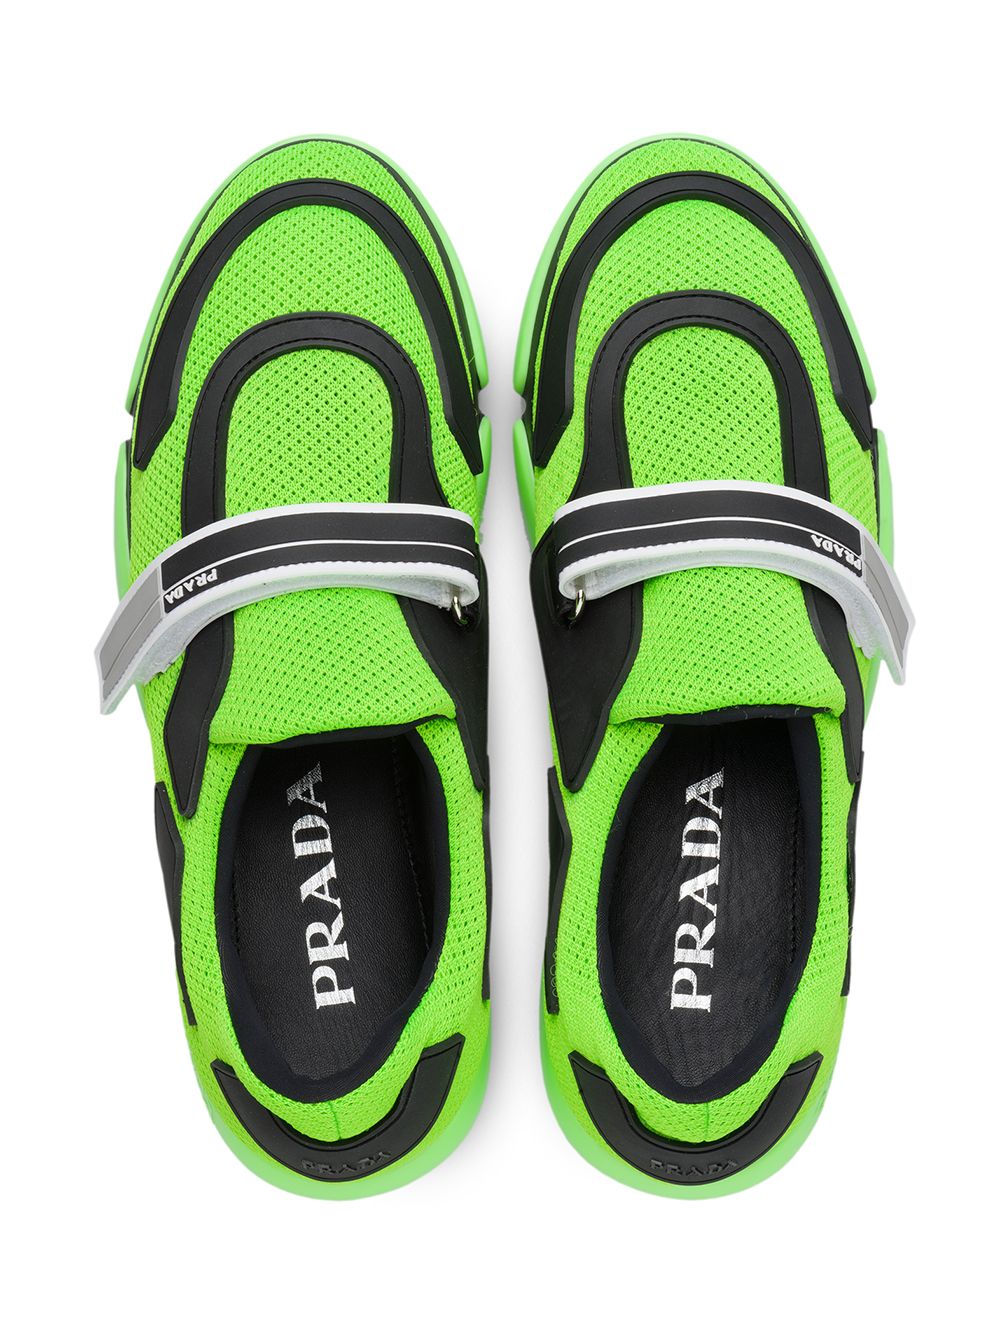 prada neon green shoes